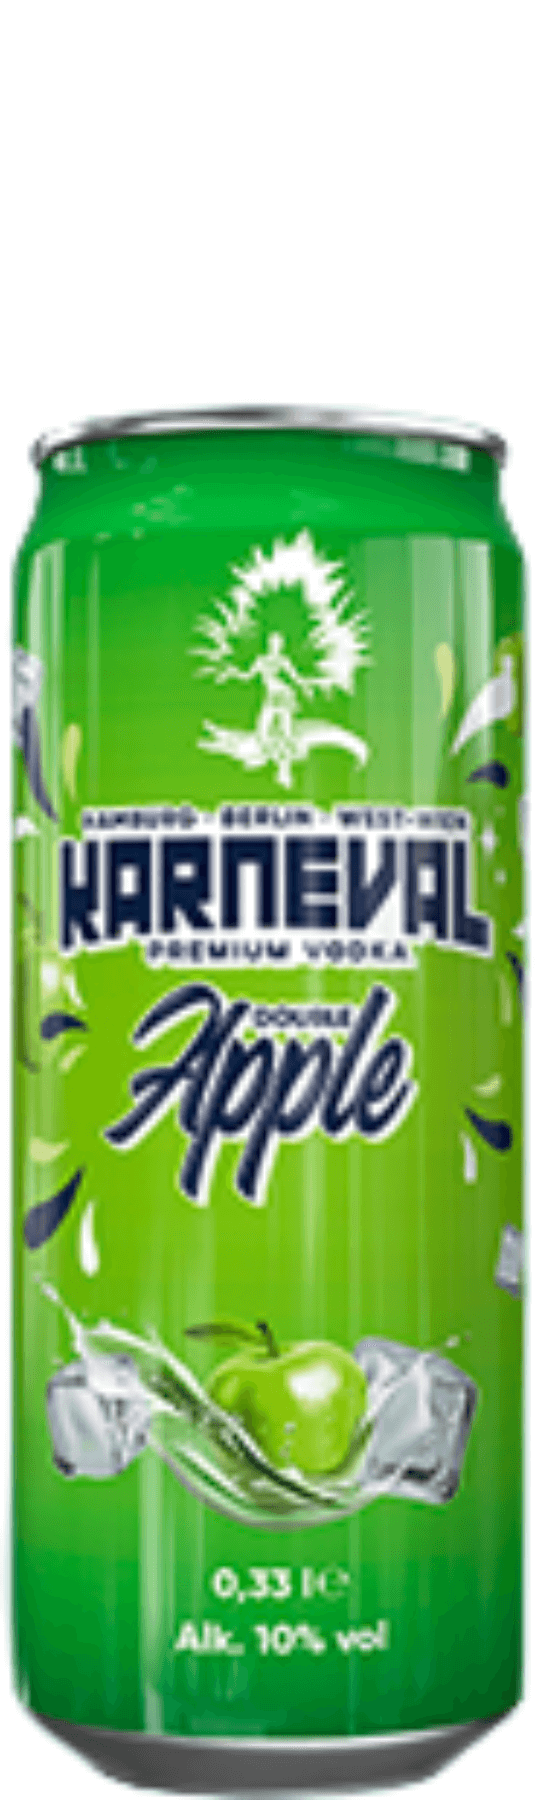 Karneval Vodka Double Apple Mix 0,33 l Dose